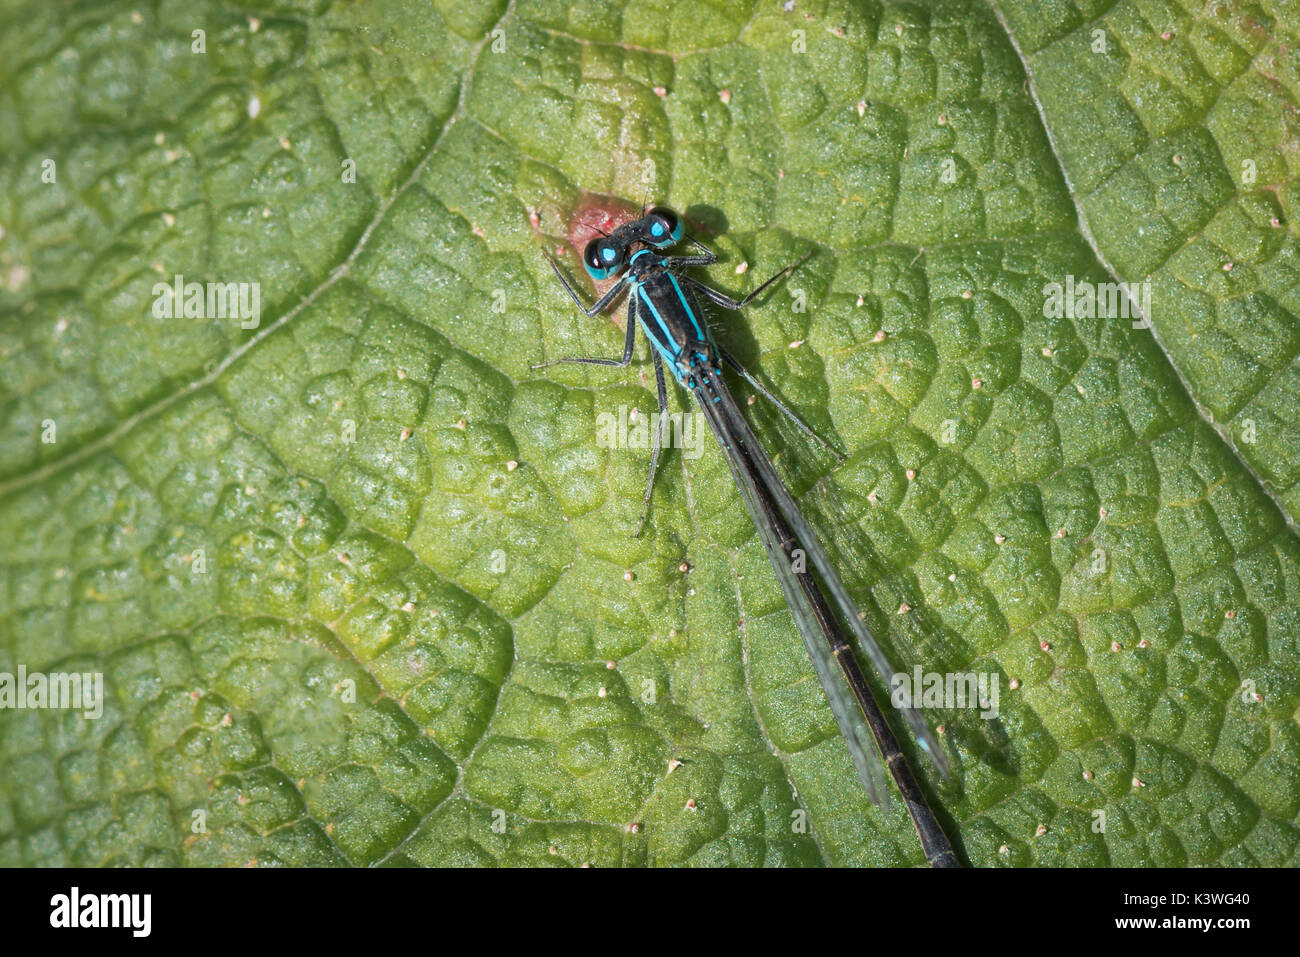 Blaue Libelle auf riesigen Rhabarber Blatt Textur muster in den Kew Gardens in London. Stockfoto